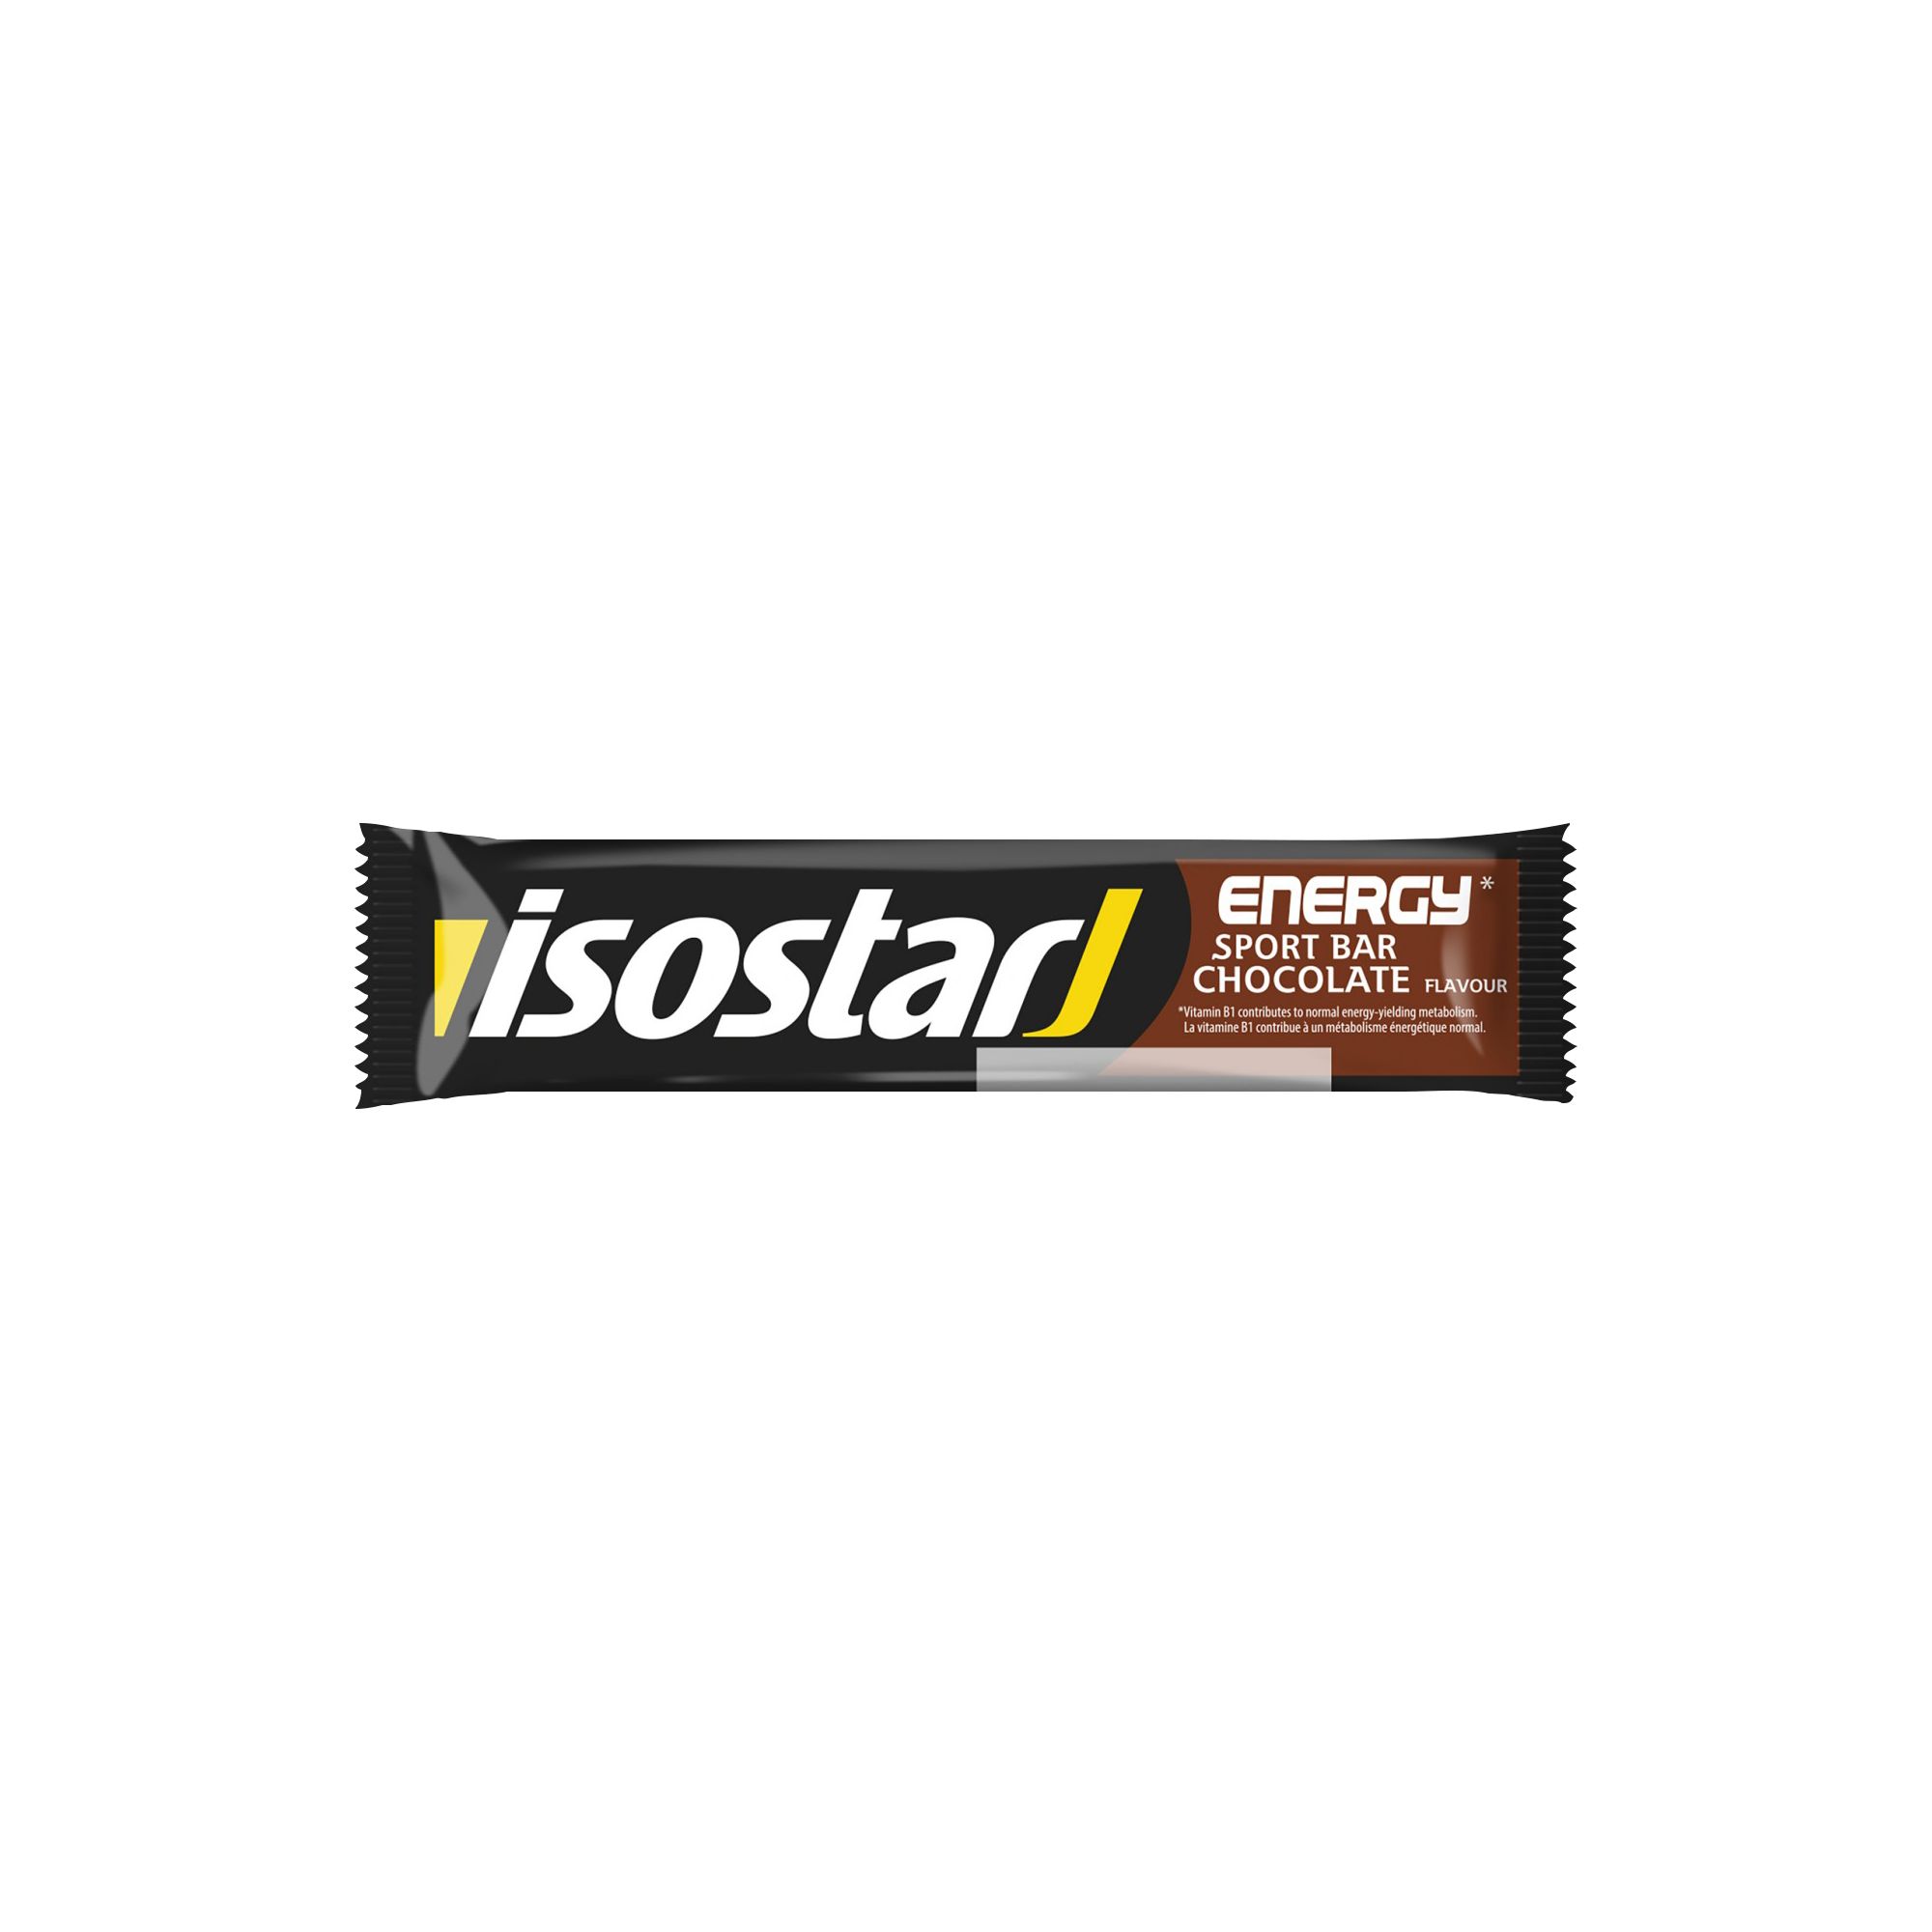 Bauturi & Energizante Energy Sport bar Isostar La reduceri bar